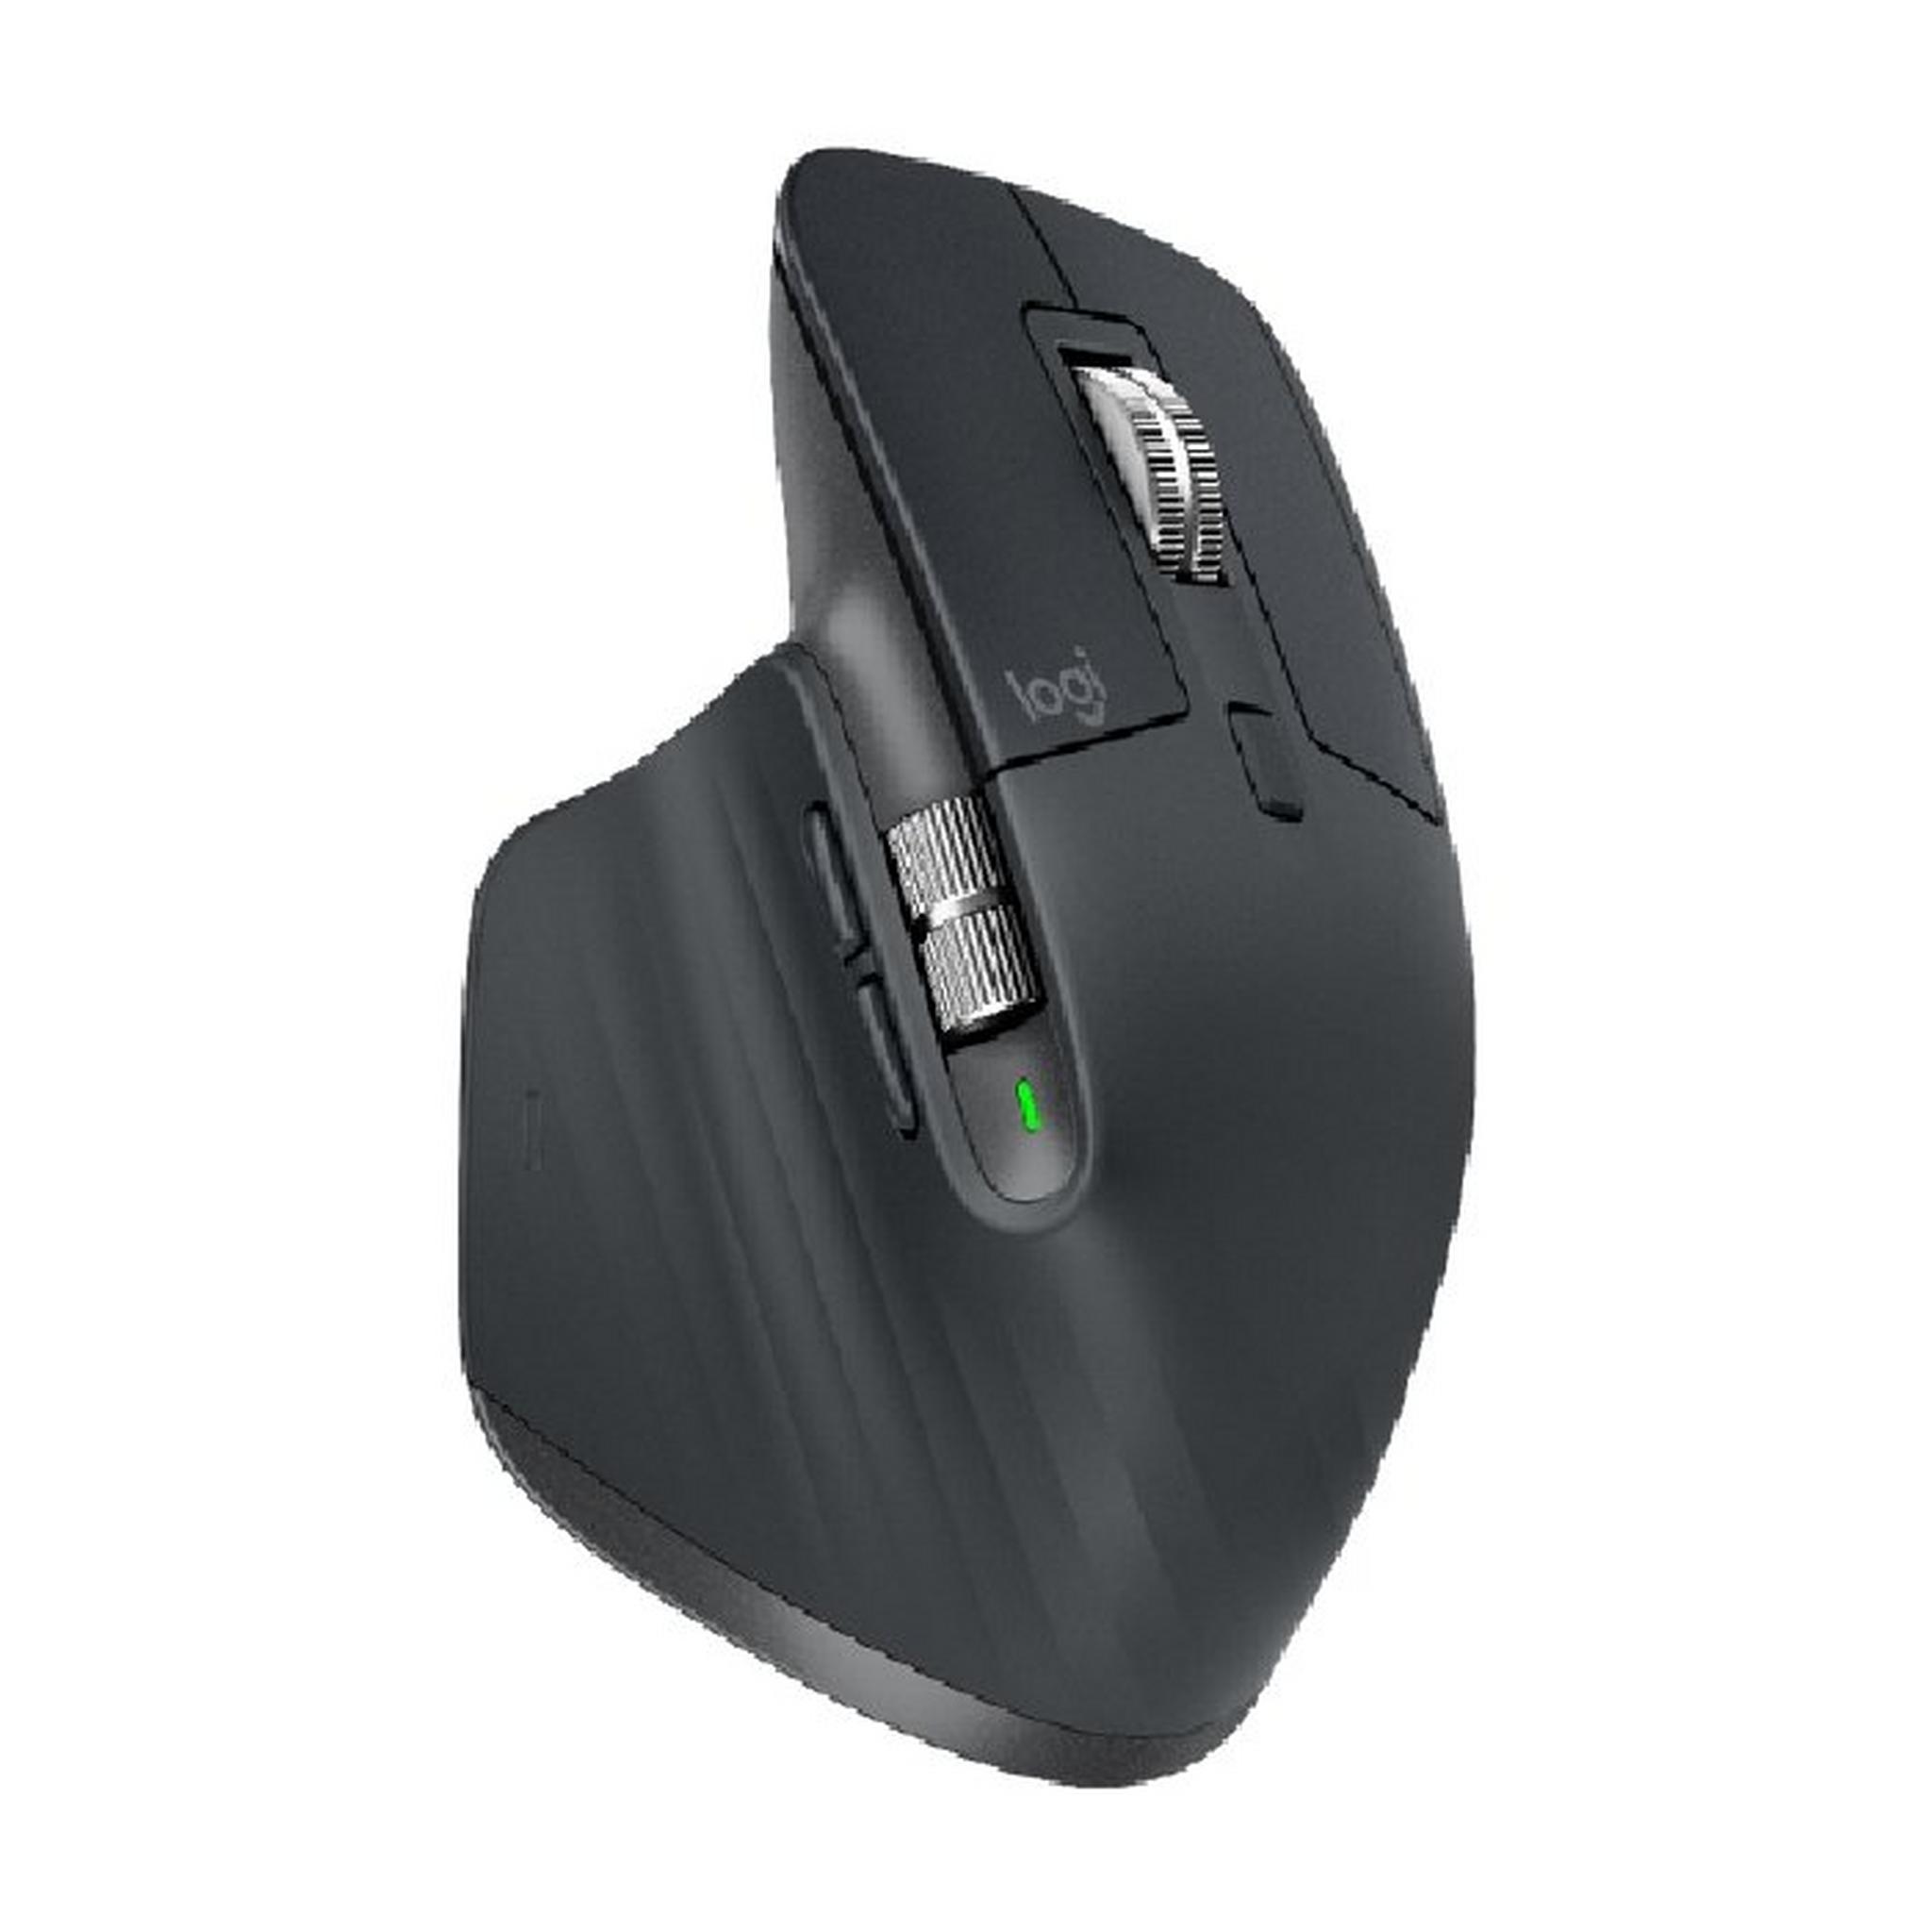 Logitech MX Master 3 Advanced Wireless Mouse (910-005694)